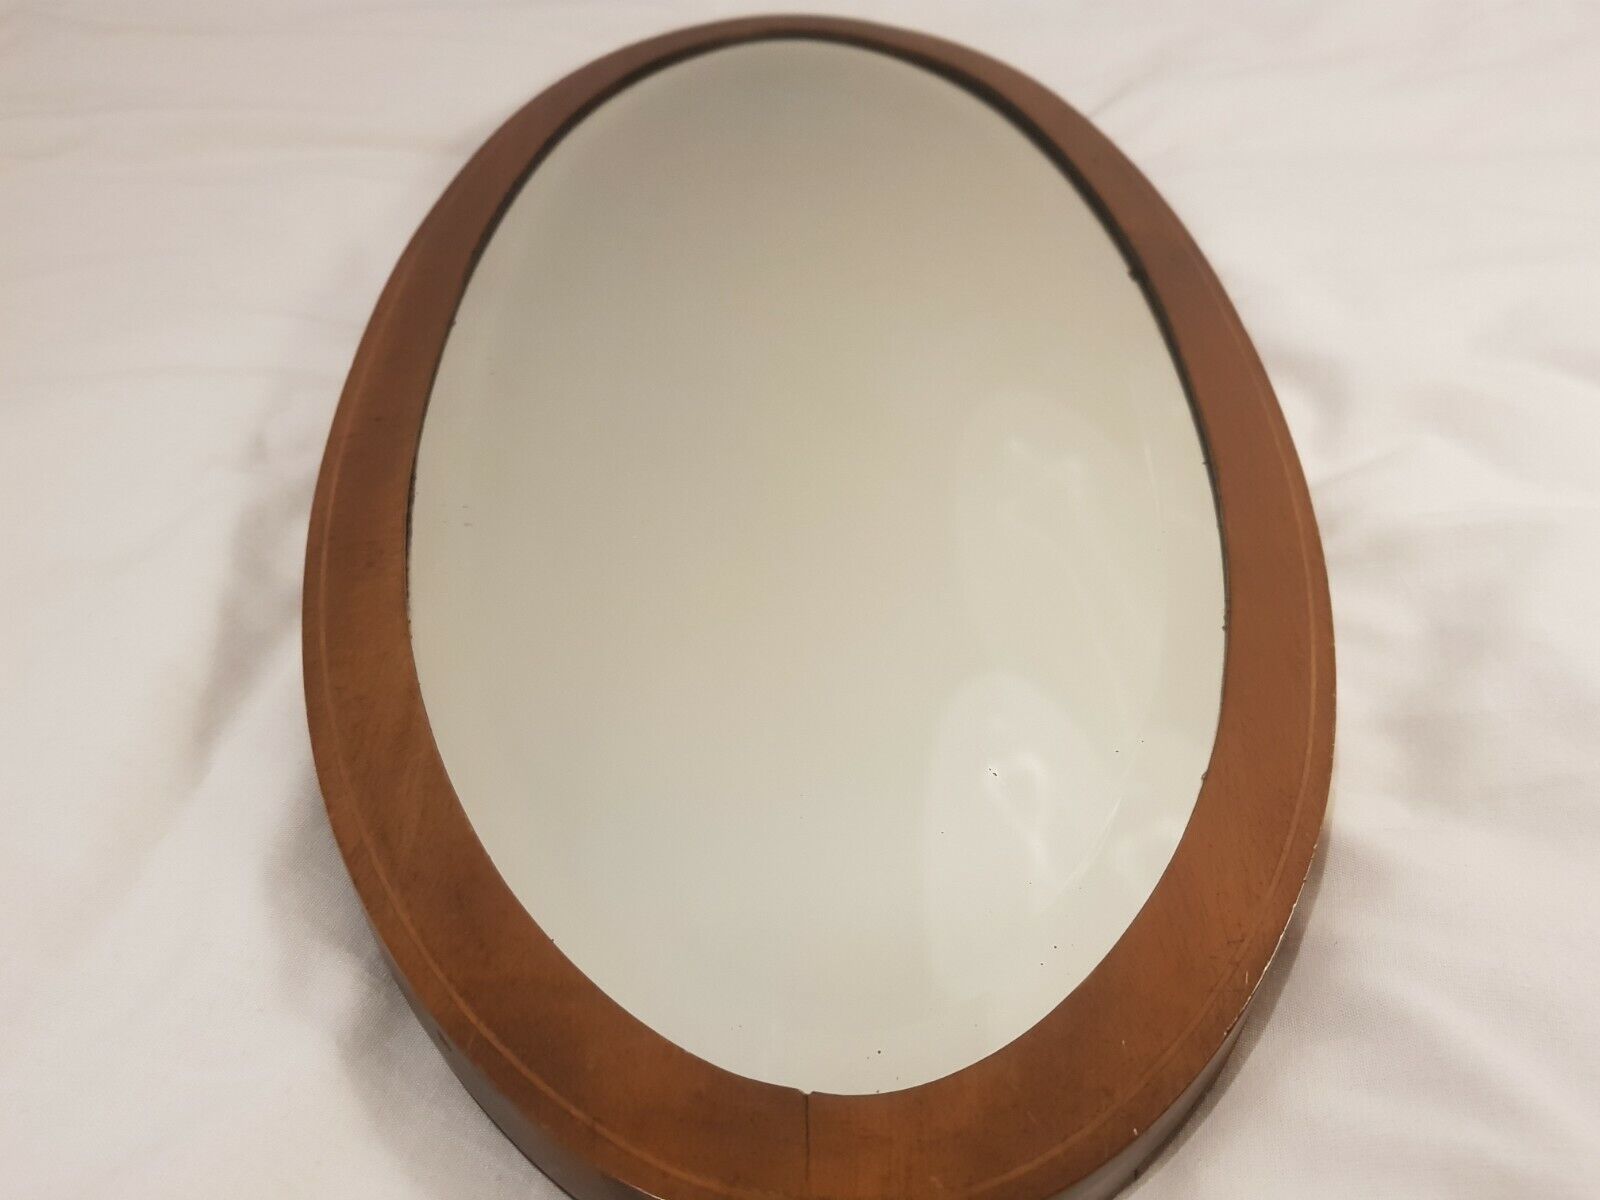 Antique Edwardian wall mirror c1910 classical oval 56cmx26cm wood frame England